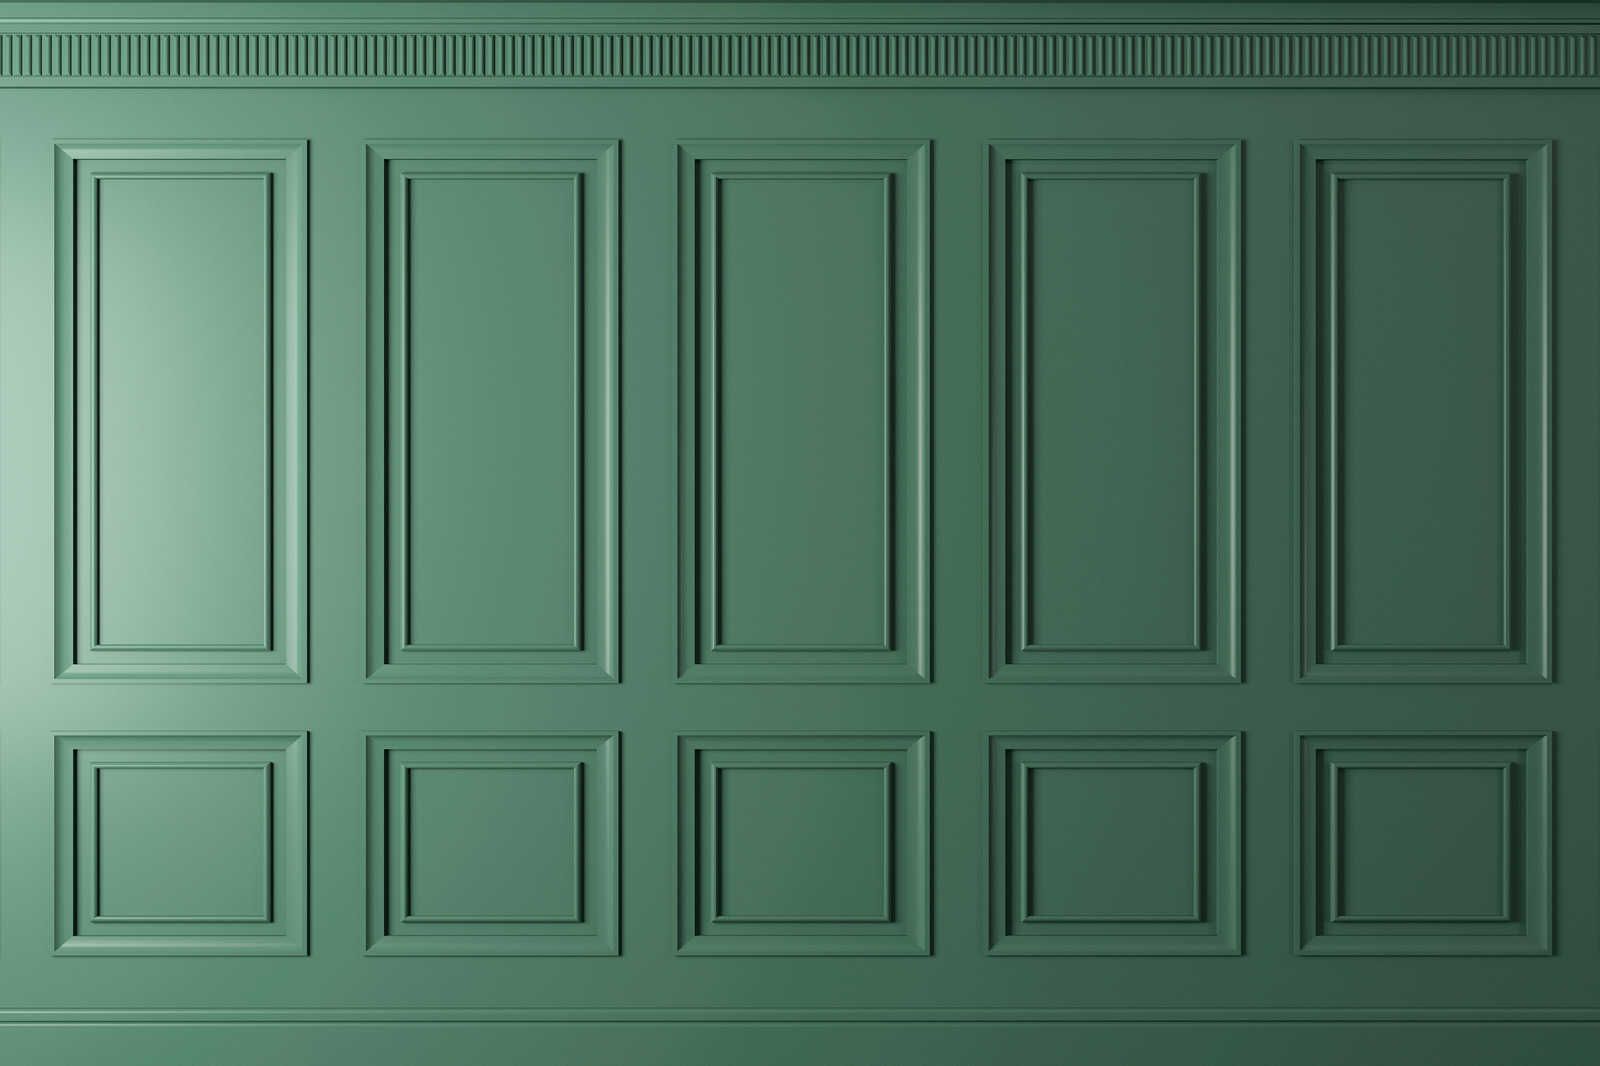             Kensington 1 - Cuadro en lienzo 3D revestimiento madera abeto verde - 0,90 m x 0,60 m
        